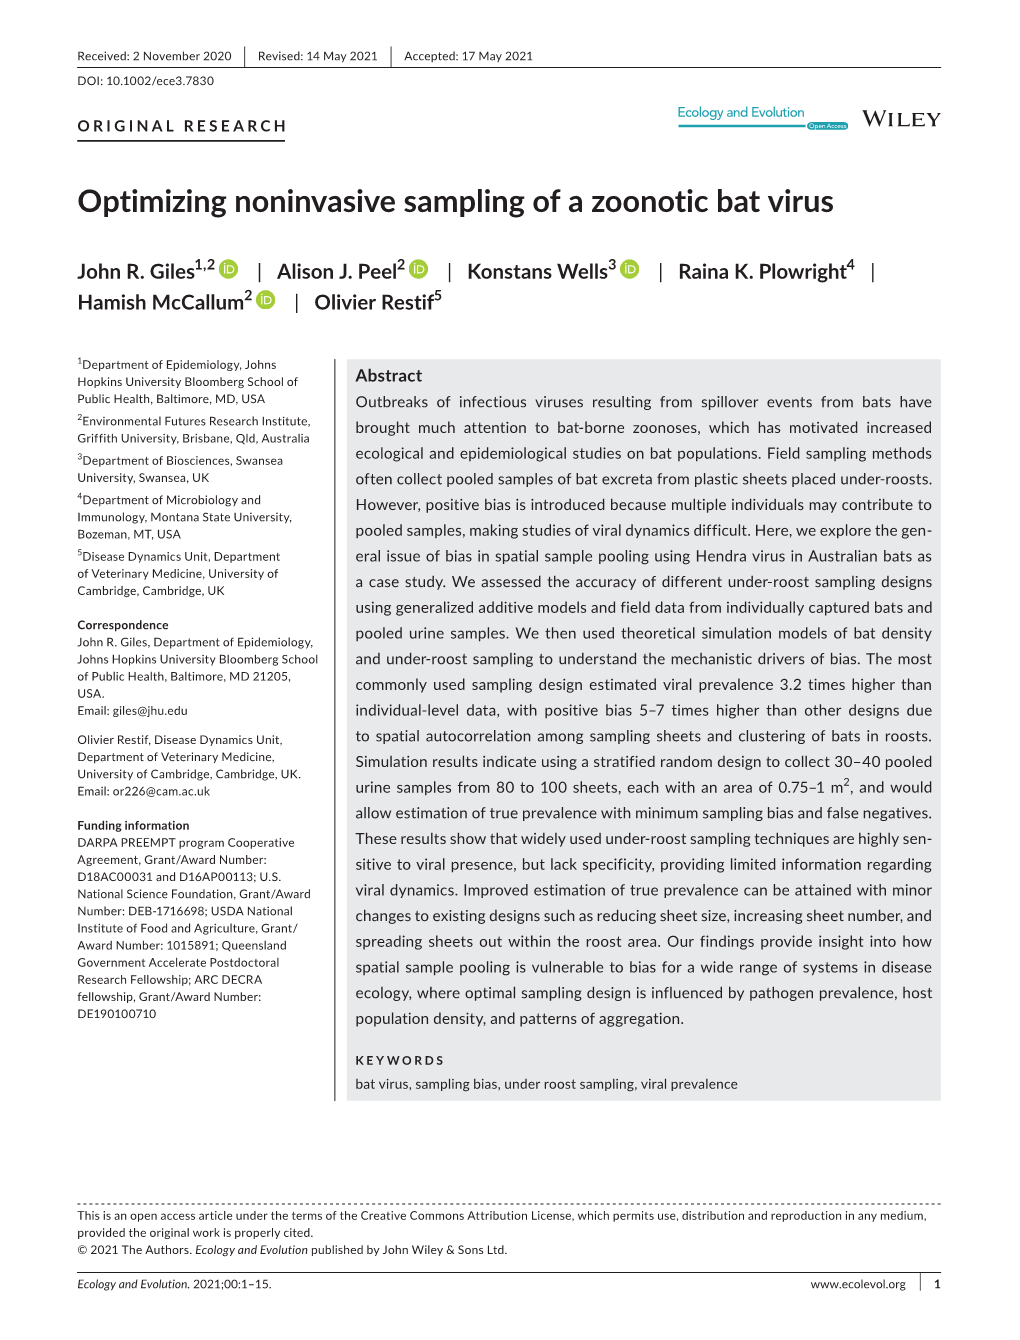 Optimizing Noninvasive Sampling of a Zoonotic Bat Virus